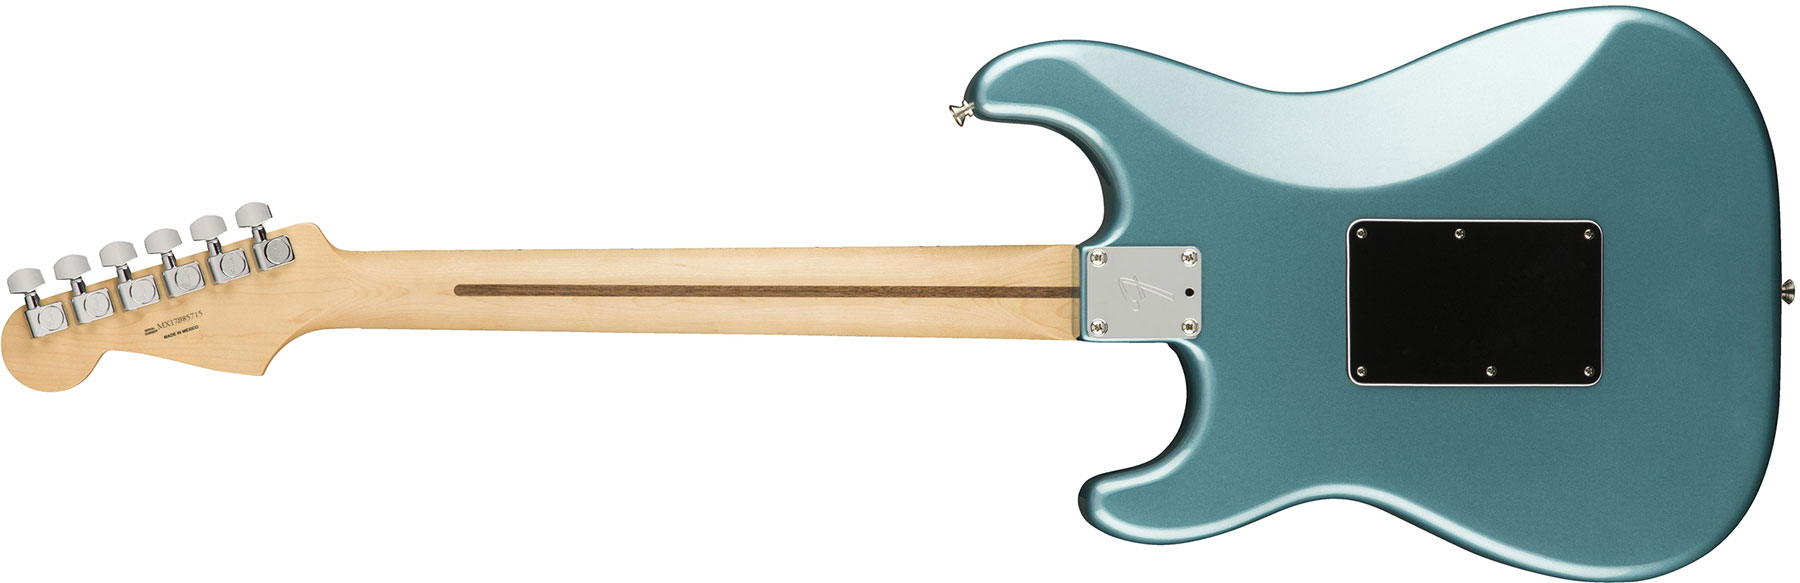 Fender Strat Player Floyd Rose Mex Hss Fr Mn - Tidepool - Guitarra eléctrica con forma de str. - Variation 1